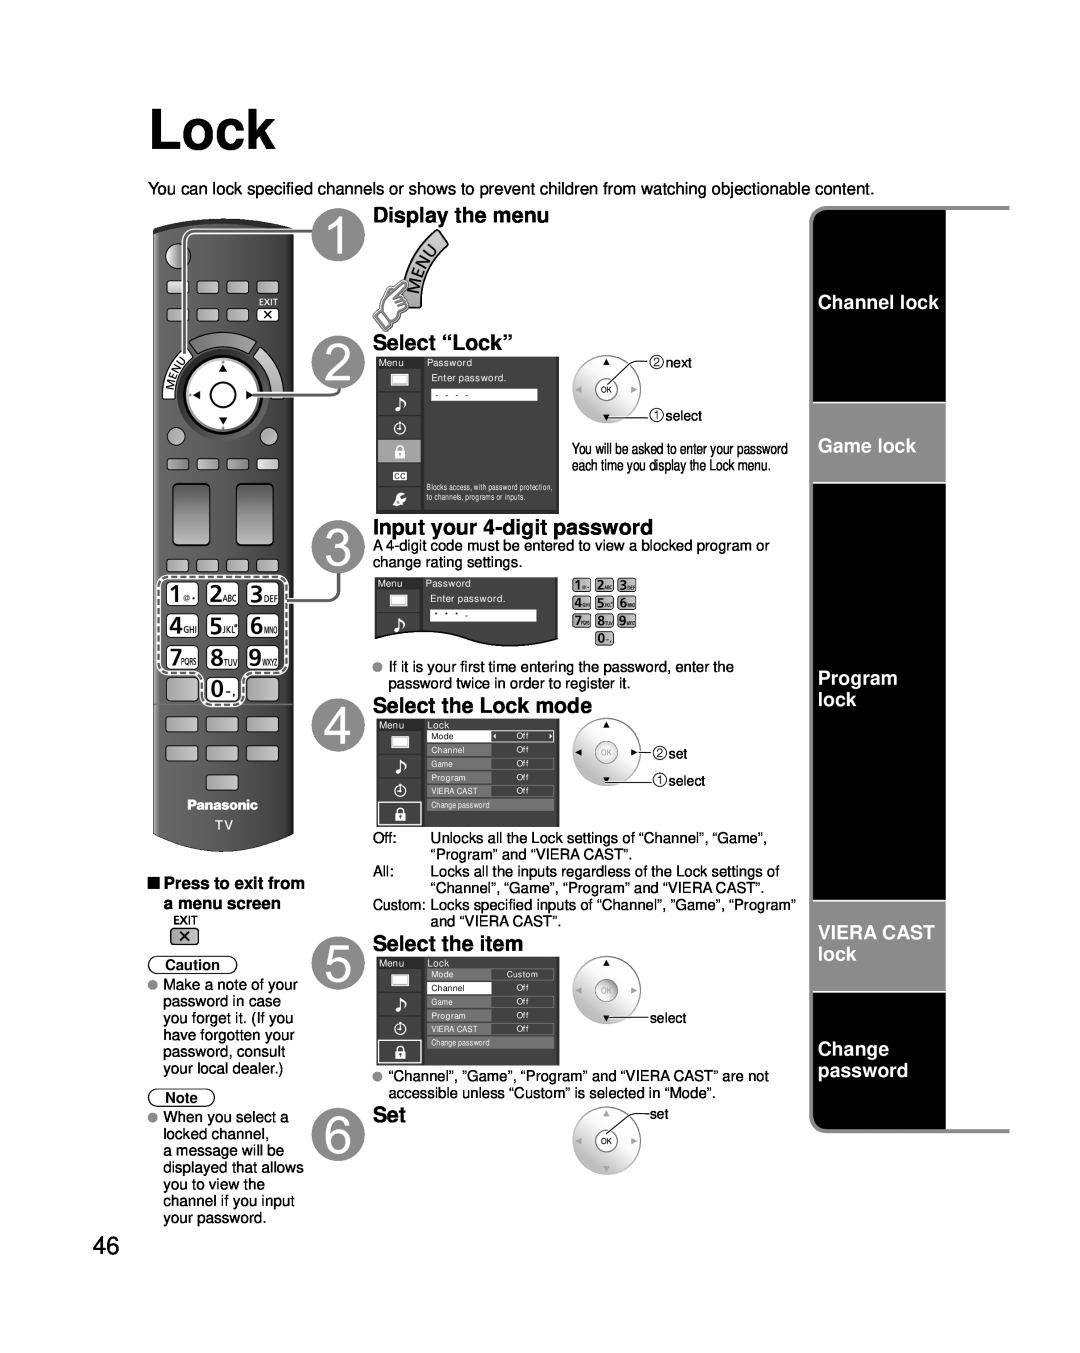 Panasonic TC-P50G25 Lock, Channel lock Game lock, Program lock VIERA CAST lock Change password, “Program” and “VIERA CAST” 